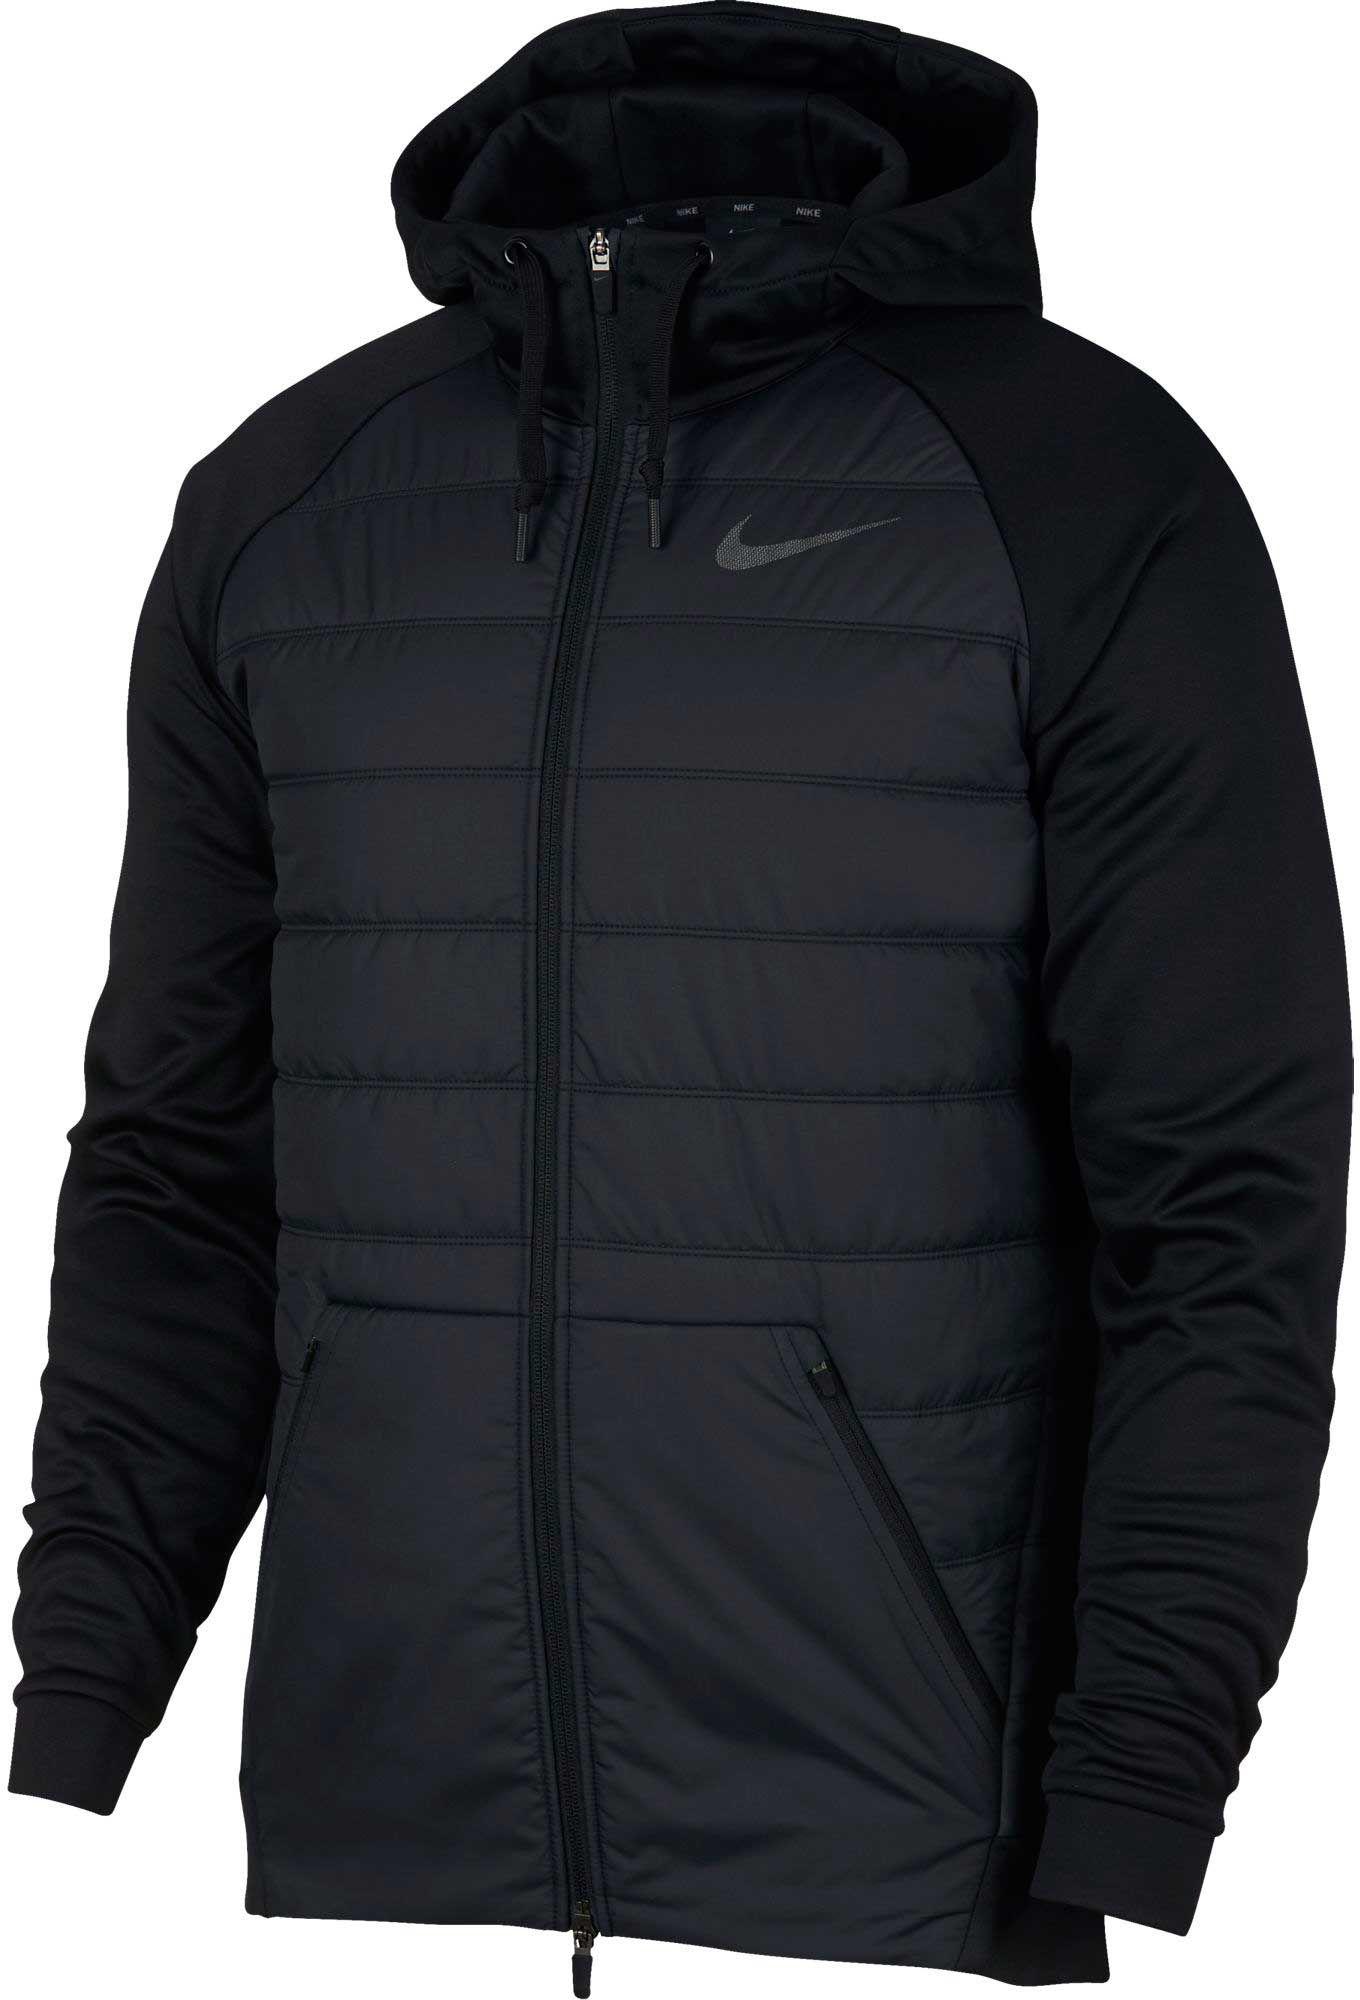 Nike Synthetic Winterized Therma Full Zip Jacket in Black for Men - Lyst